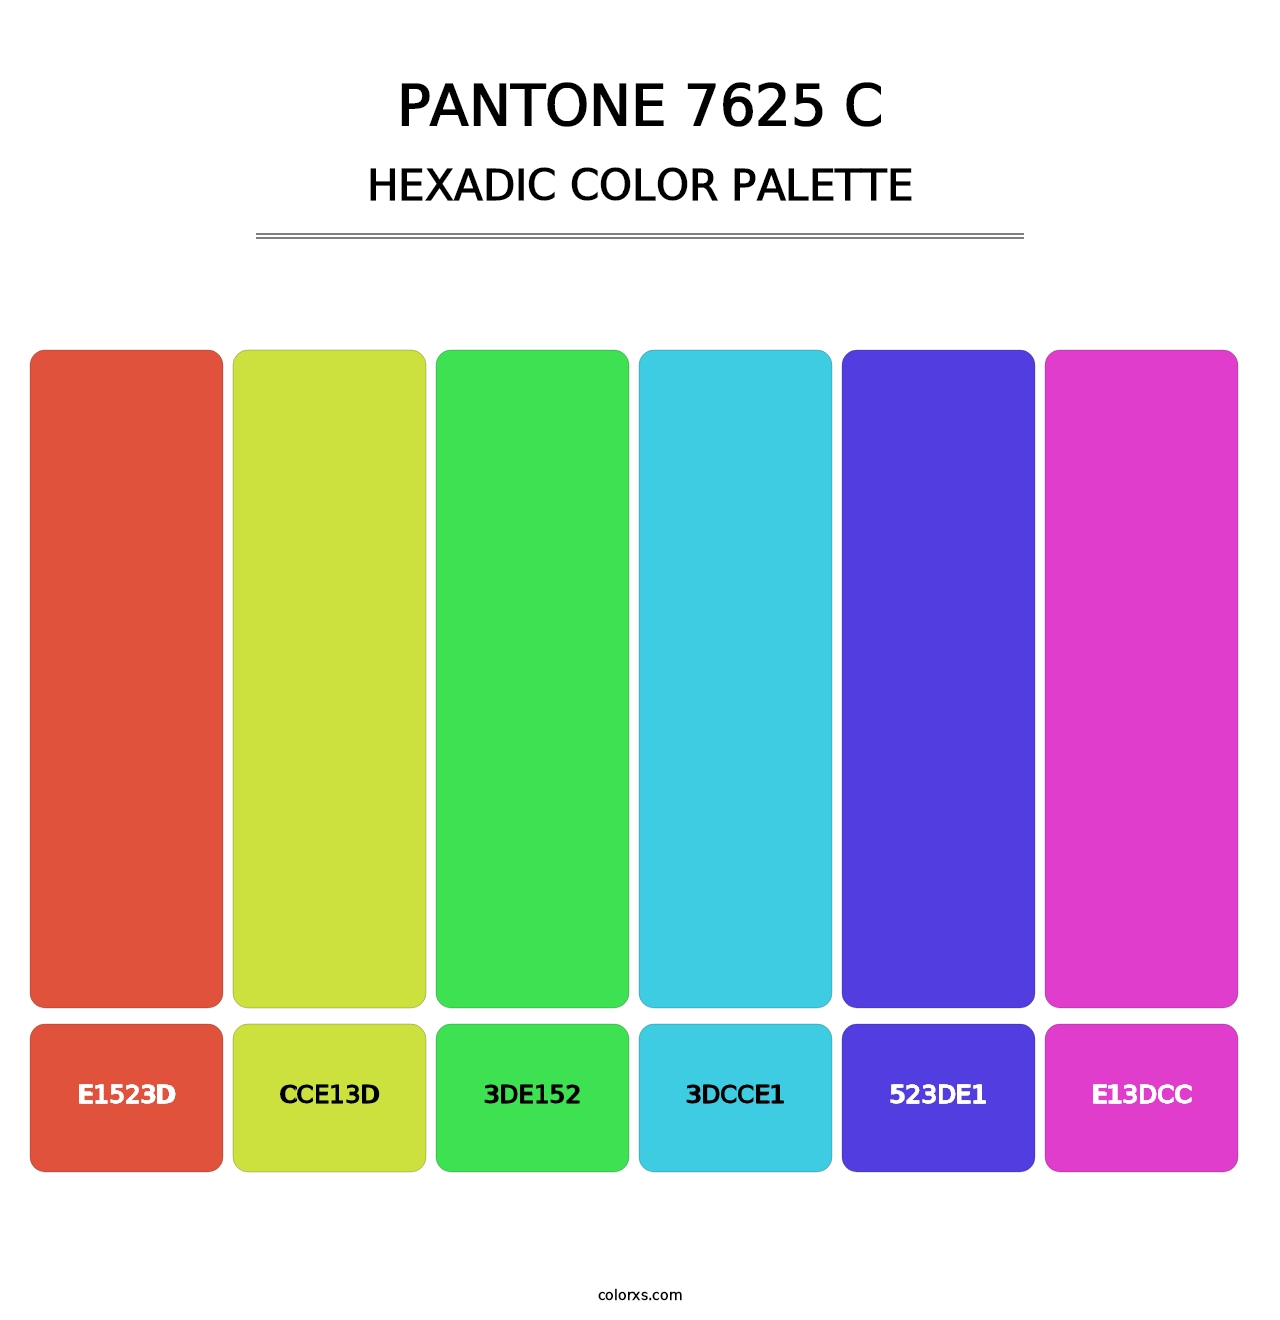 PANTONE 7625 C - Hexadic Color Palette